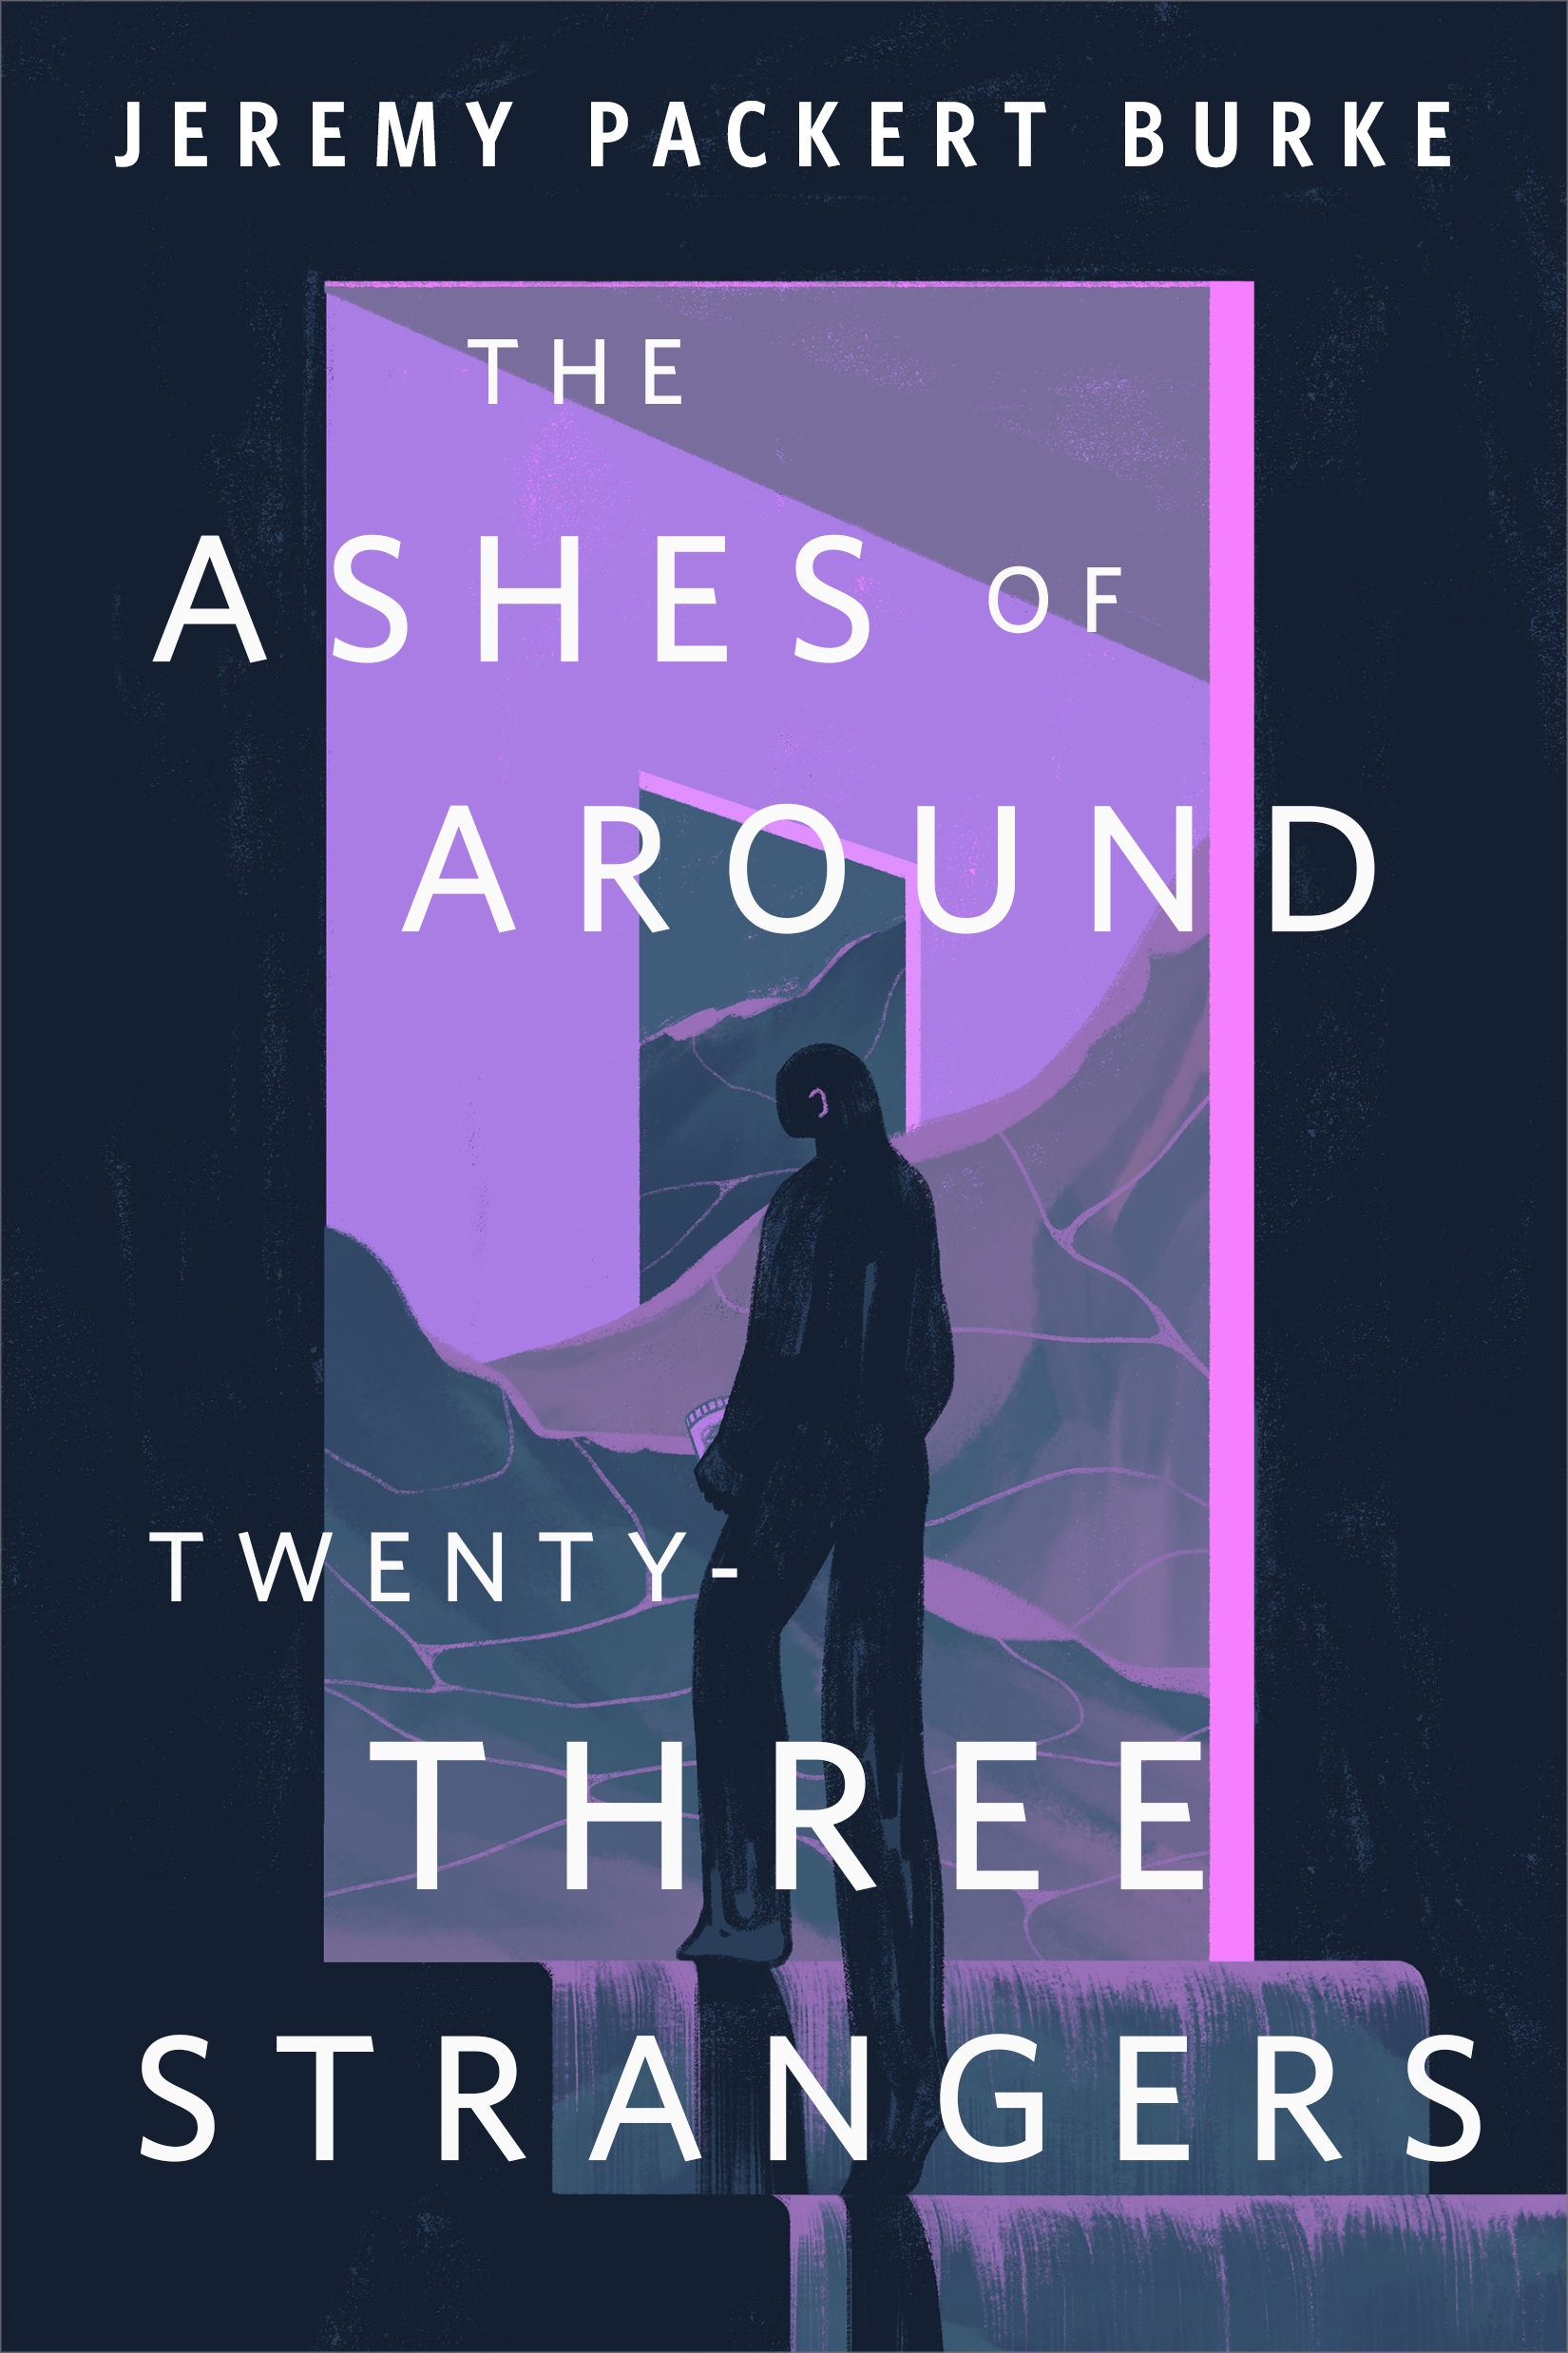 The Ashes of Around Twenty-Three Strangers : A Tor.com Original by Jeremy Packert Burke